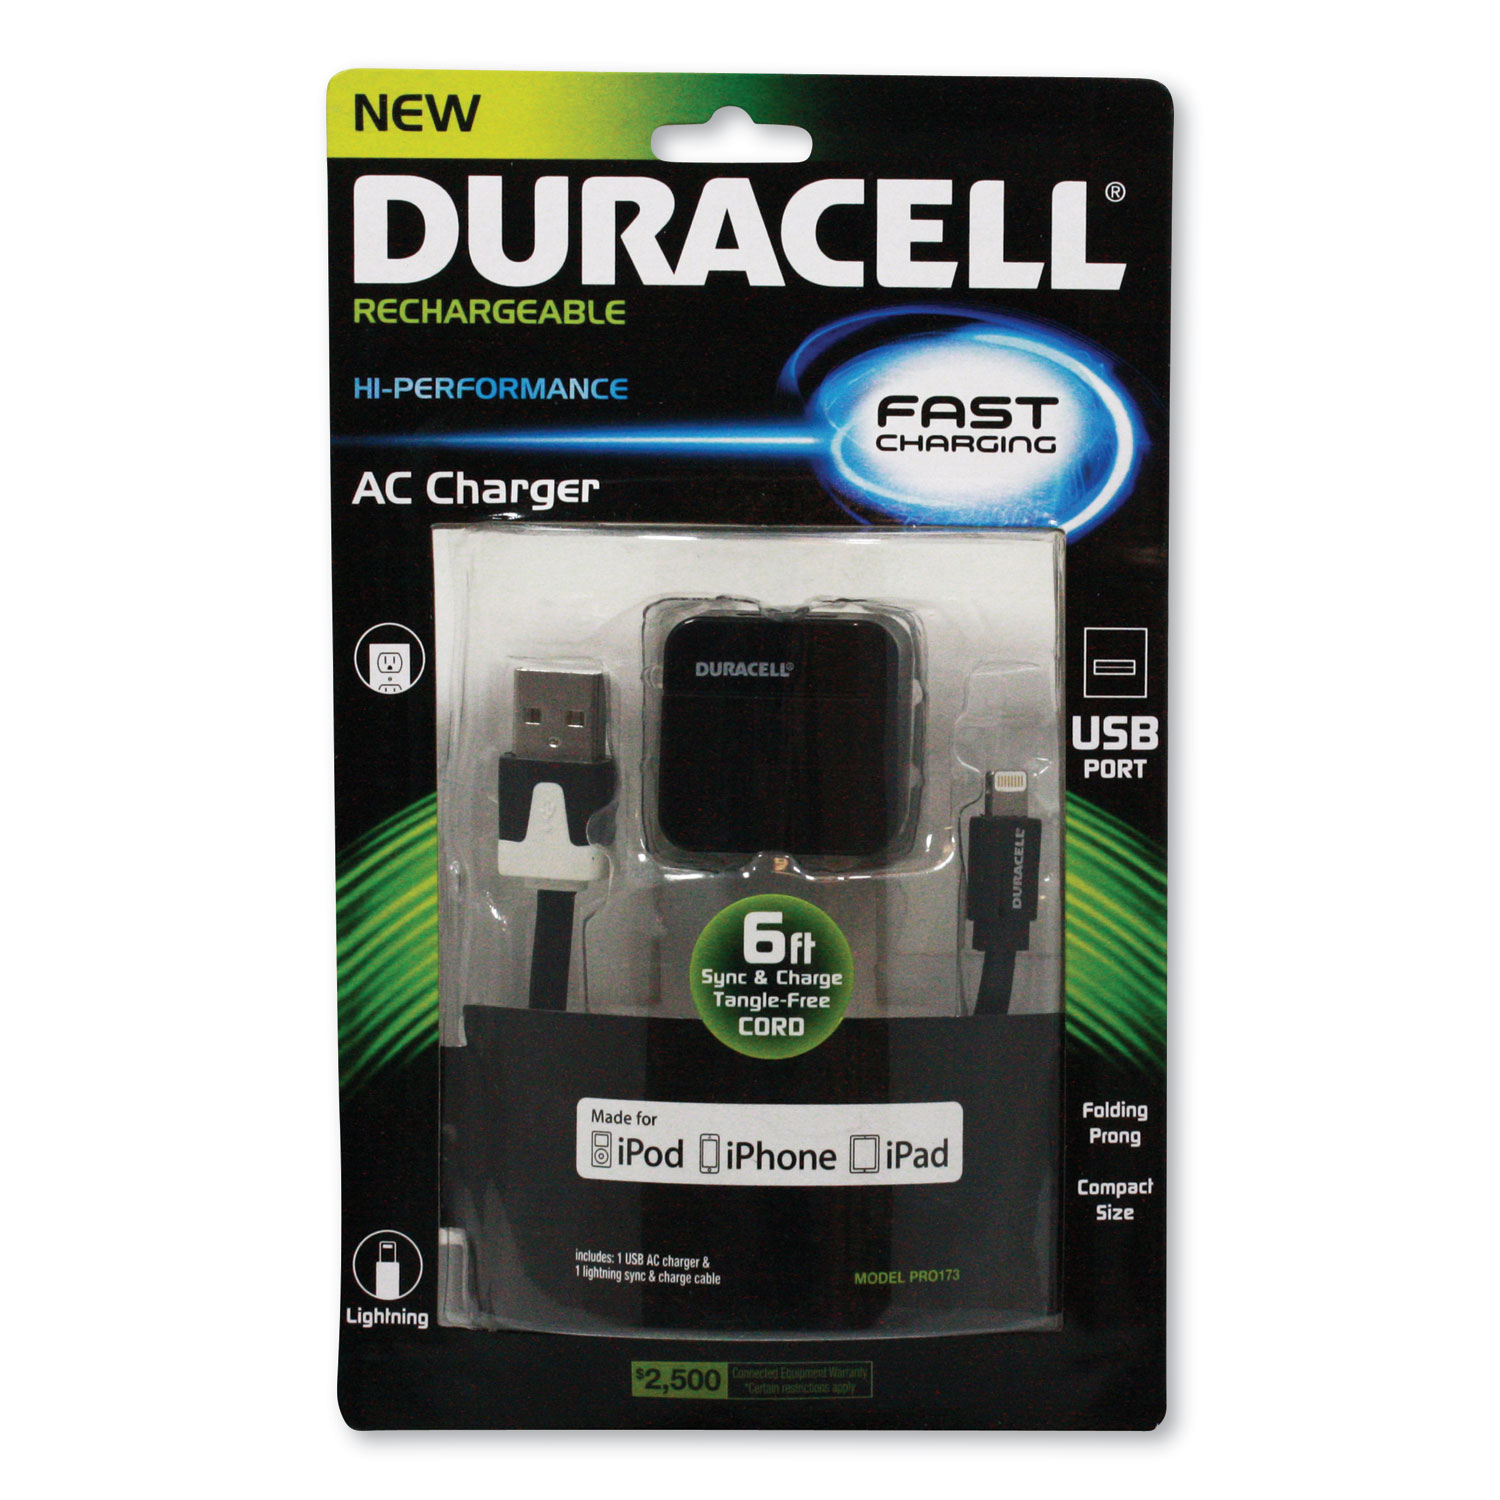  Duracell DU5274 Hi-Performance Wall Charger for iPad; iPhone; iPod, Lightning Connector, Folding Prong (ECADU5274) 